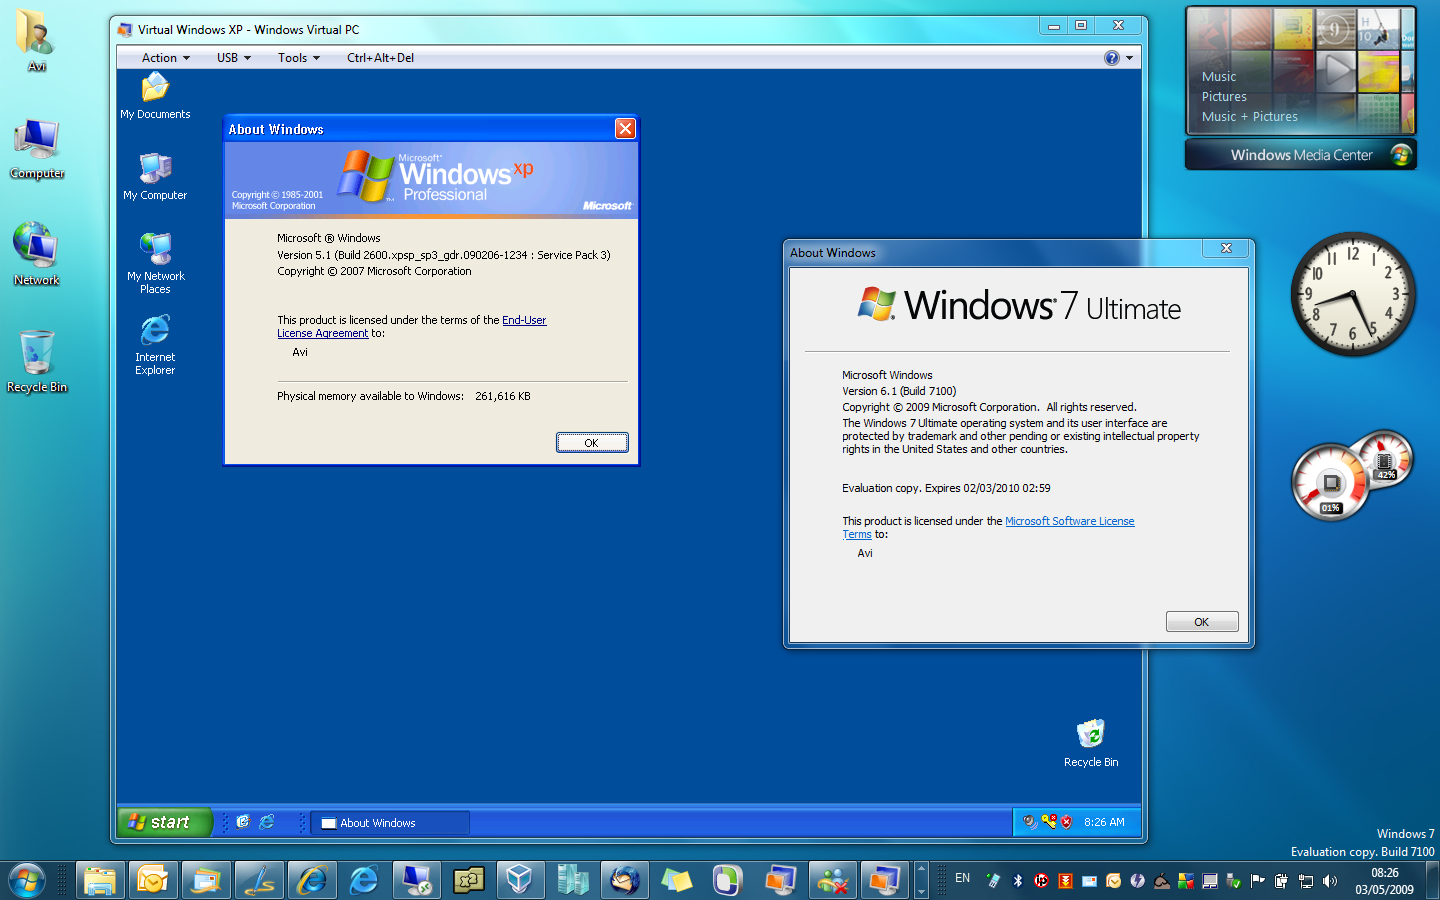 Windows 7 Virtual Machine